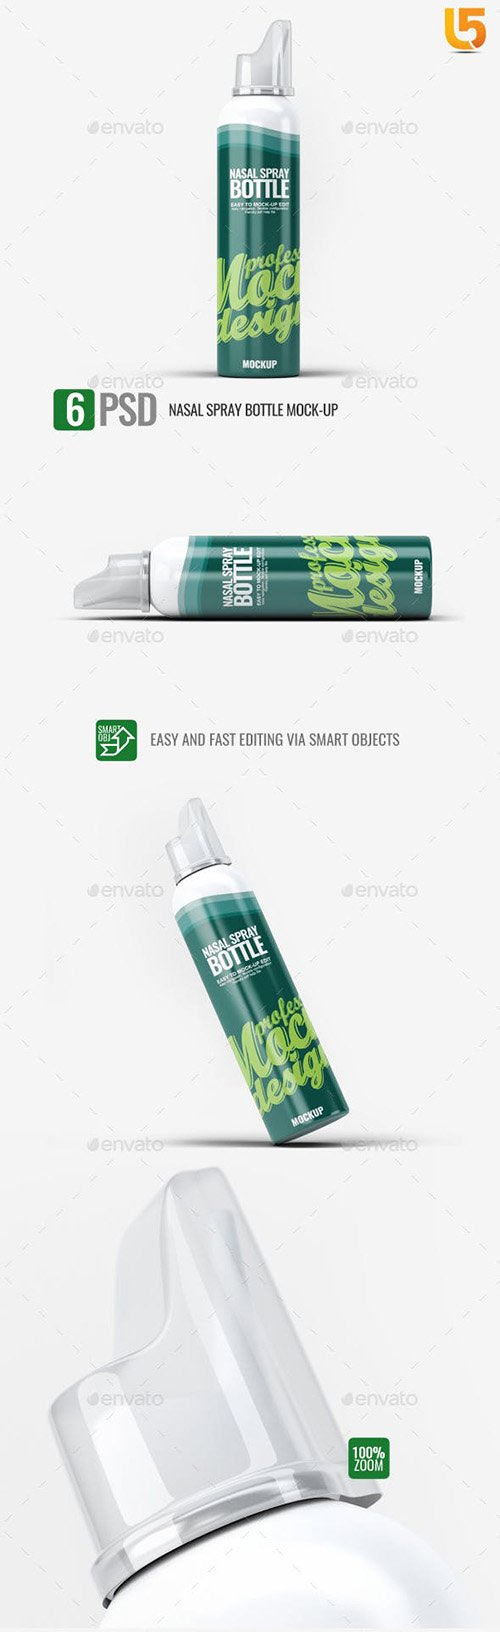 Nasal Spray Bottle Mock-Up 23611604